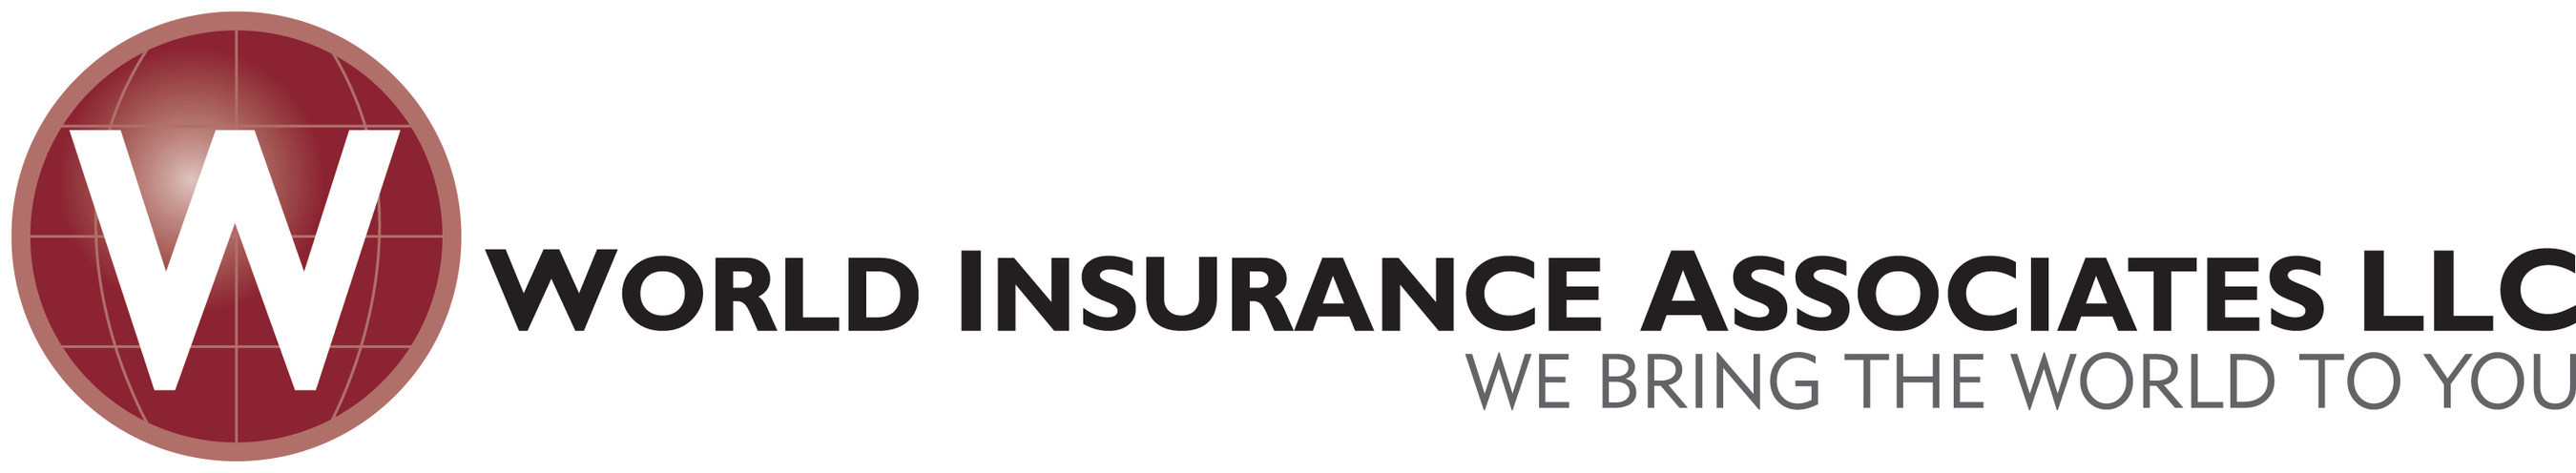 World Insurance Associates LLC is headquartered in Tinton Falls, New Jersey.